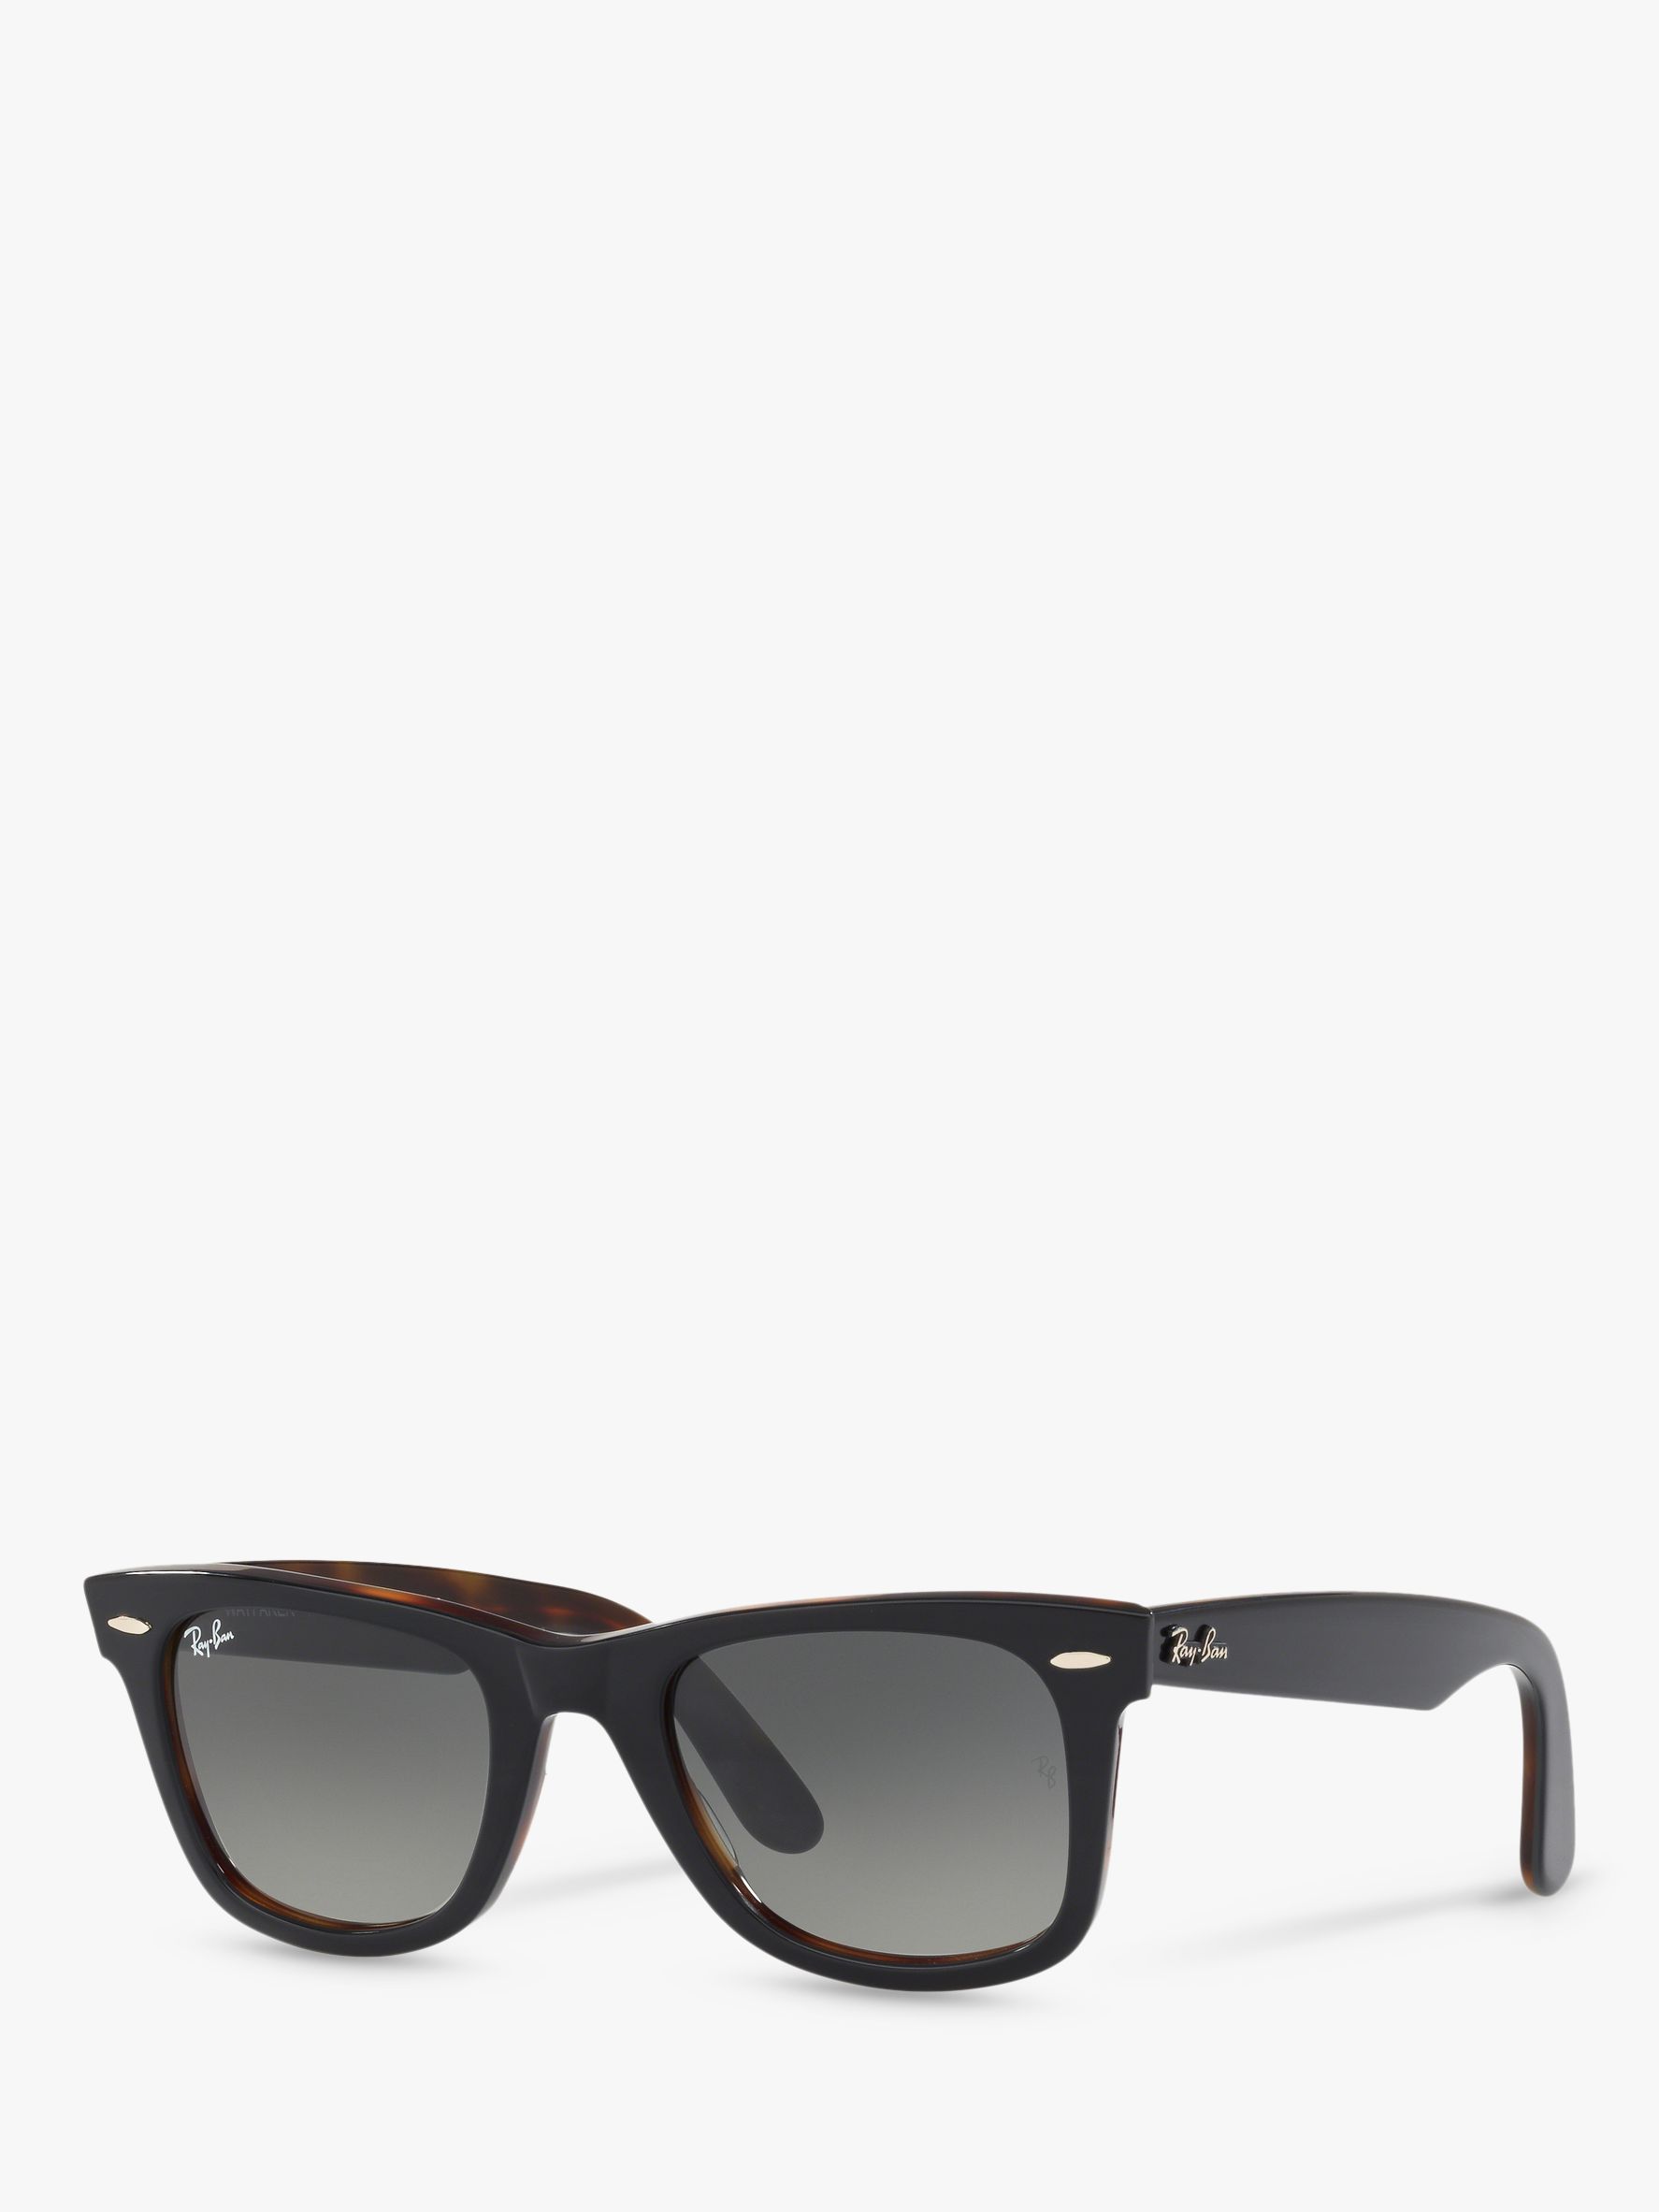 grey wayfarer sunglasses